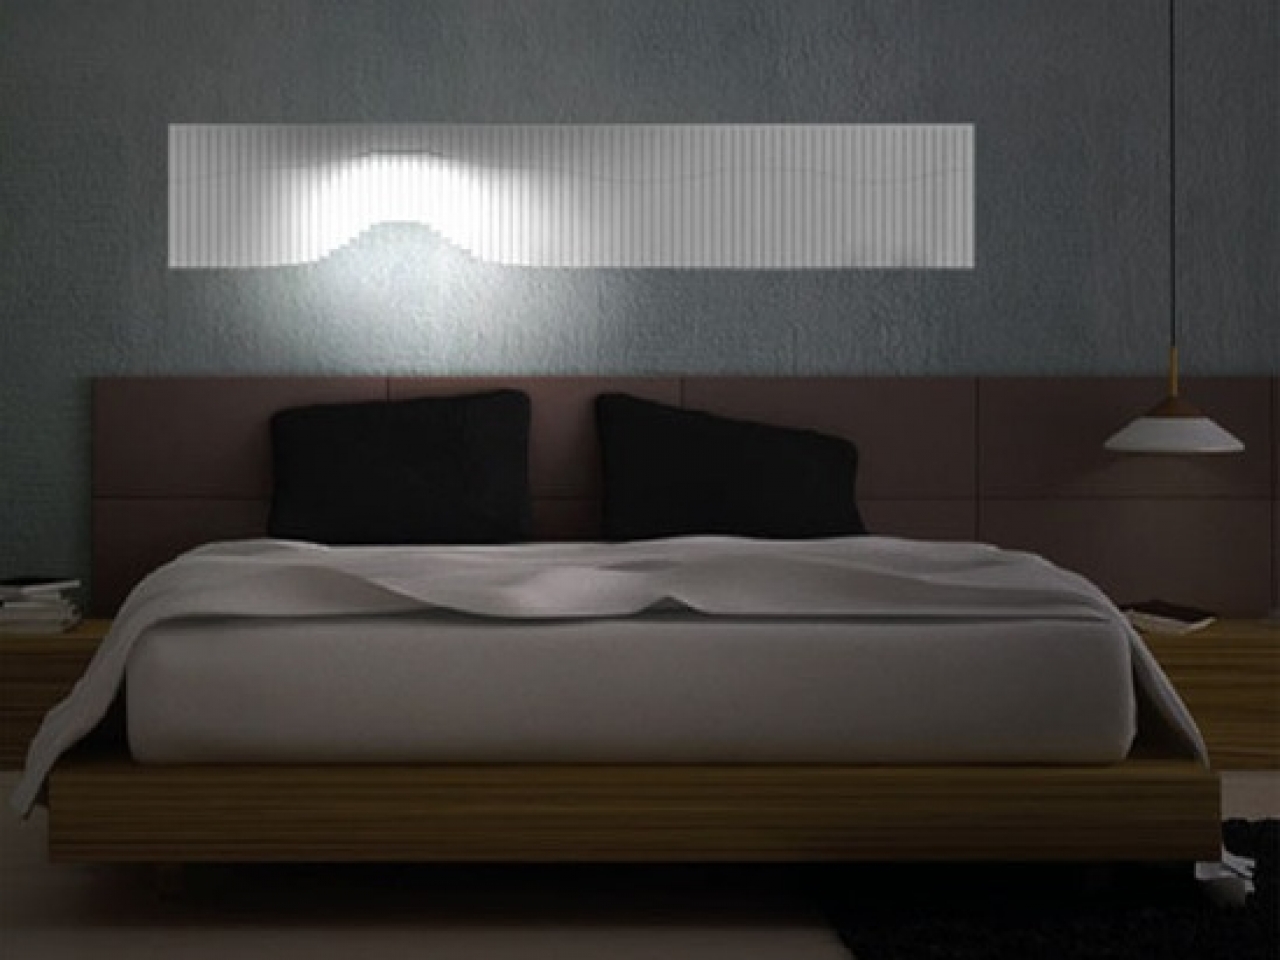 bedroom-wall-decorating-ideas-decorative-bedroom-wall-light-dcce9445e05ad6cf.jpg